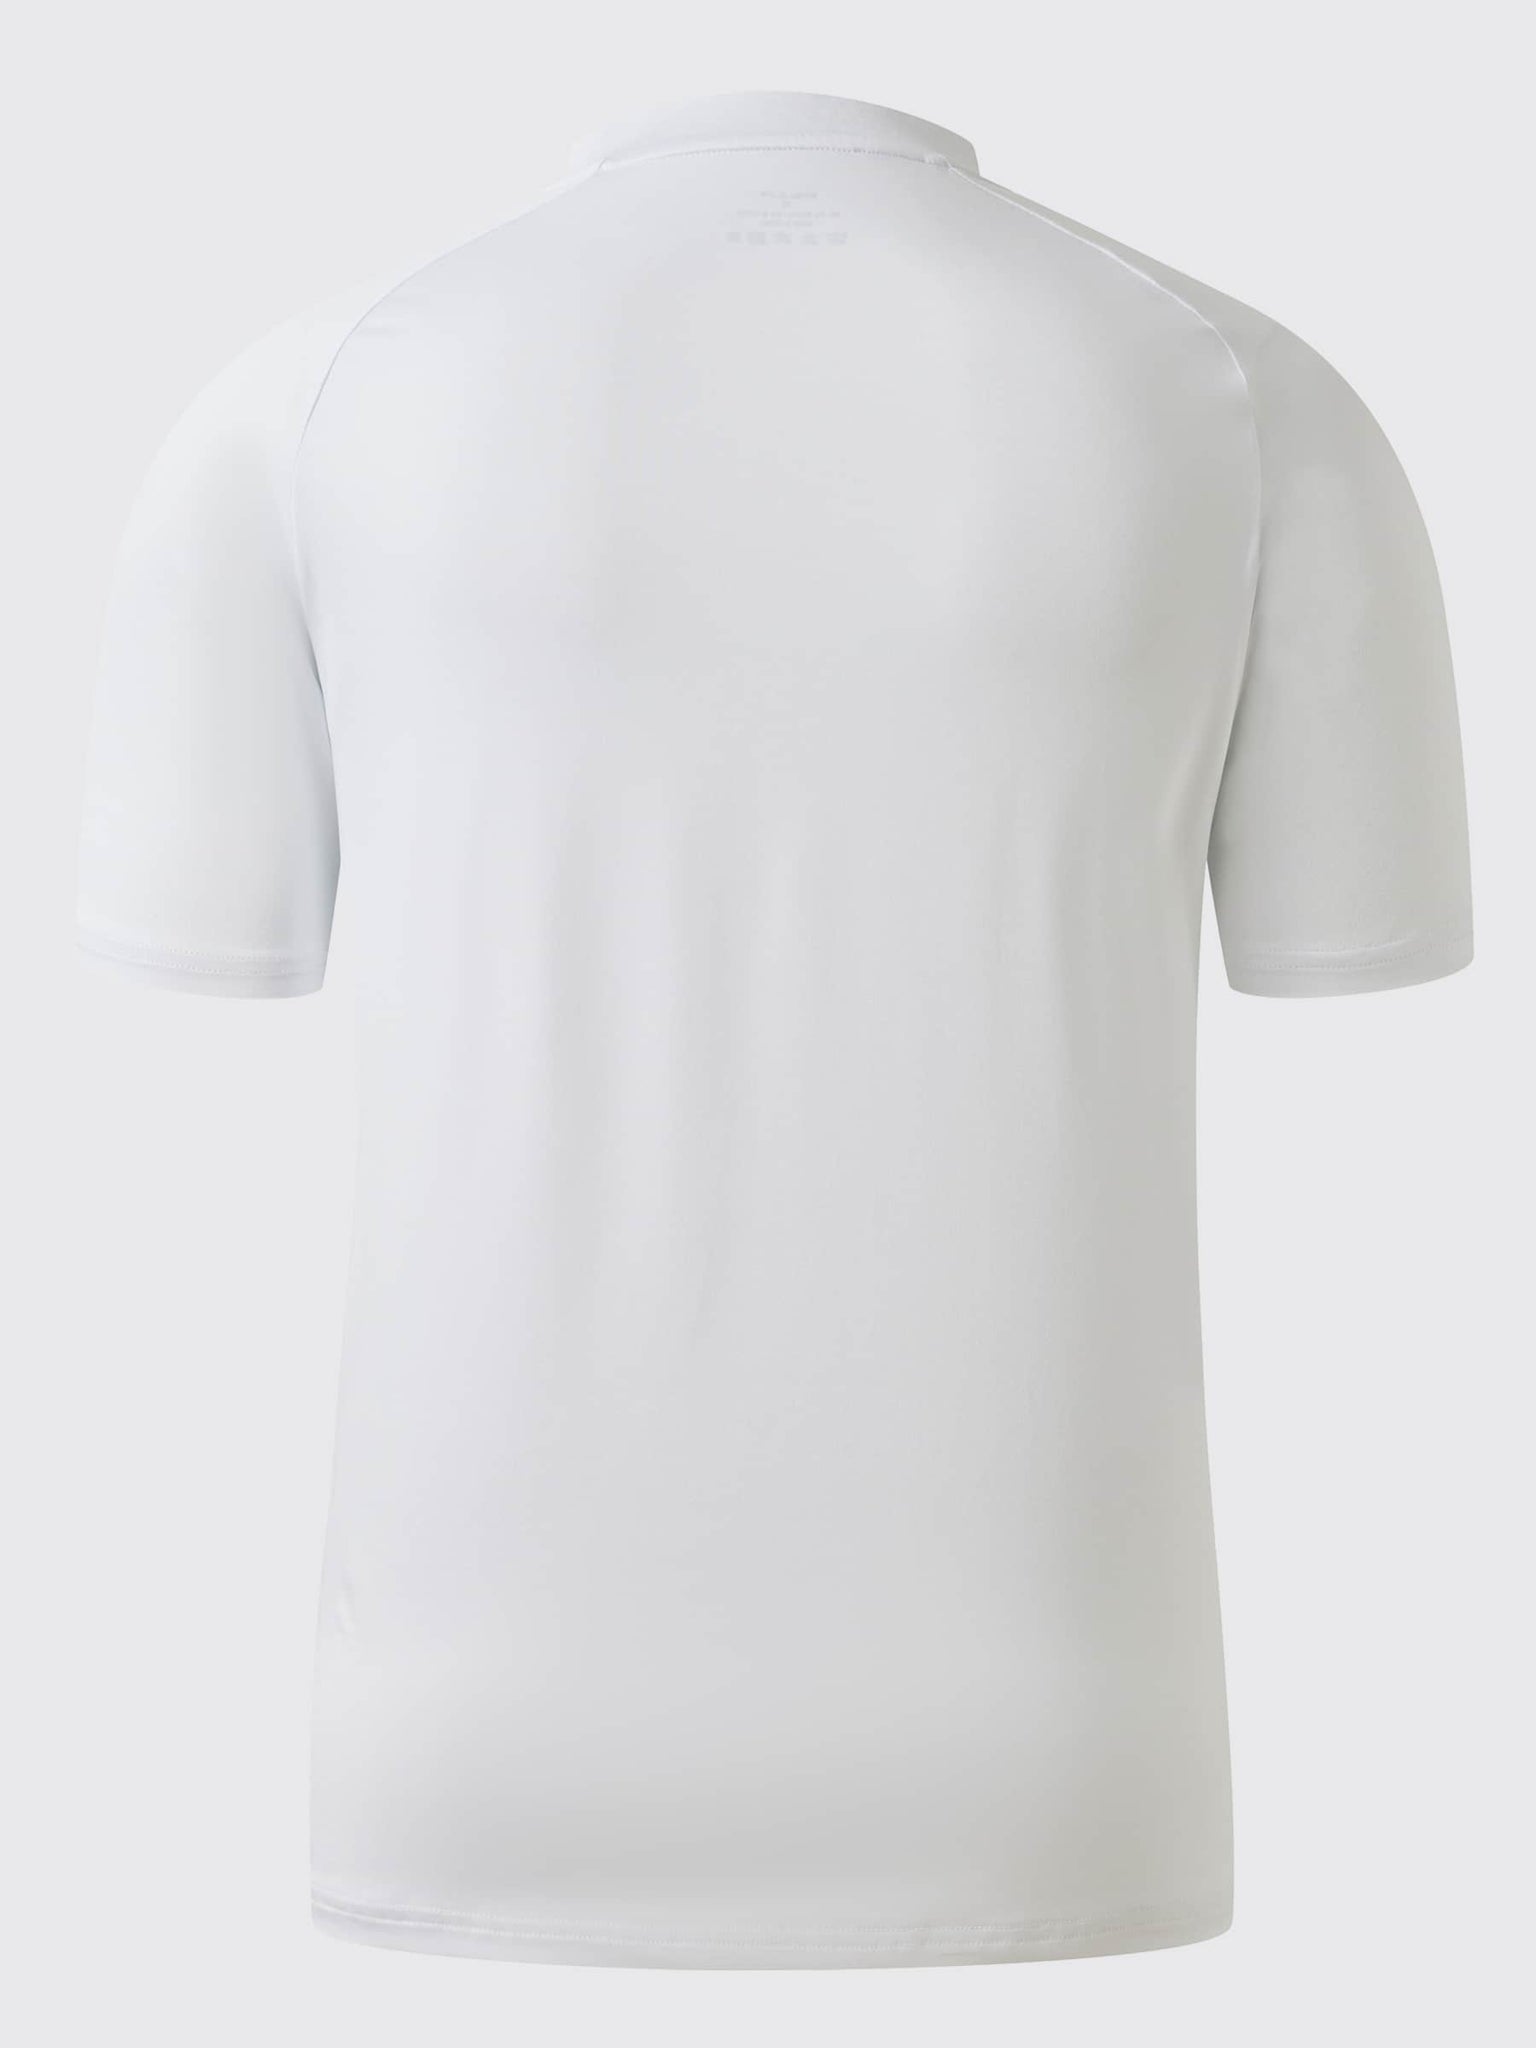 Men's Tennis Shirts Sun Protection_white2